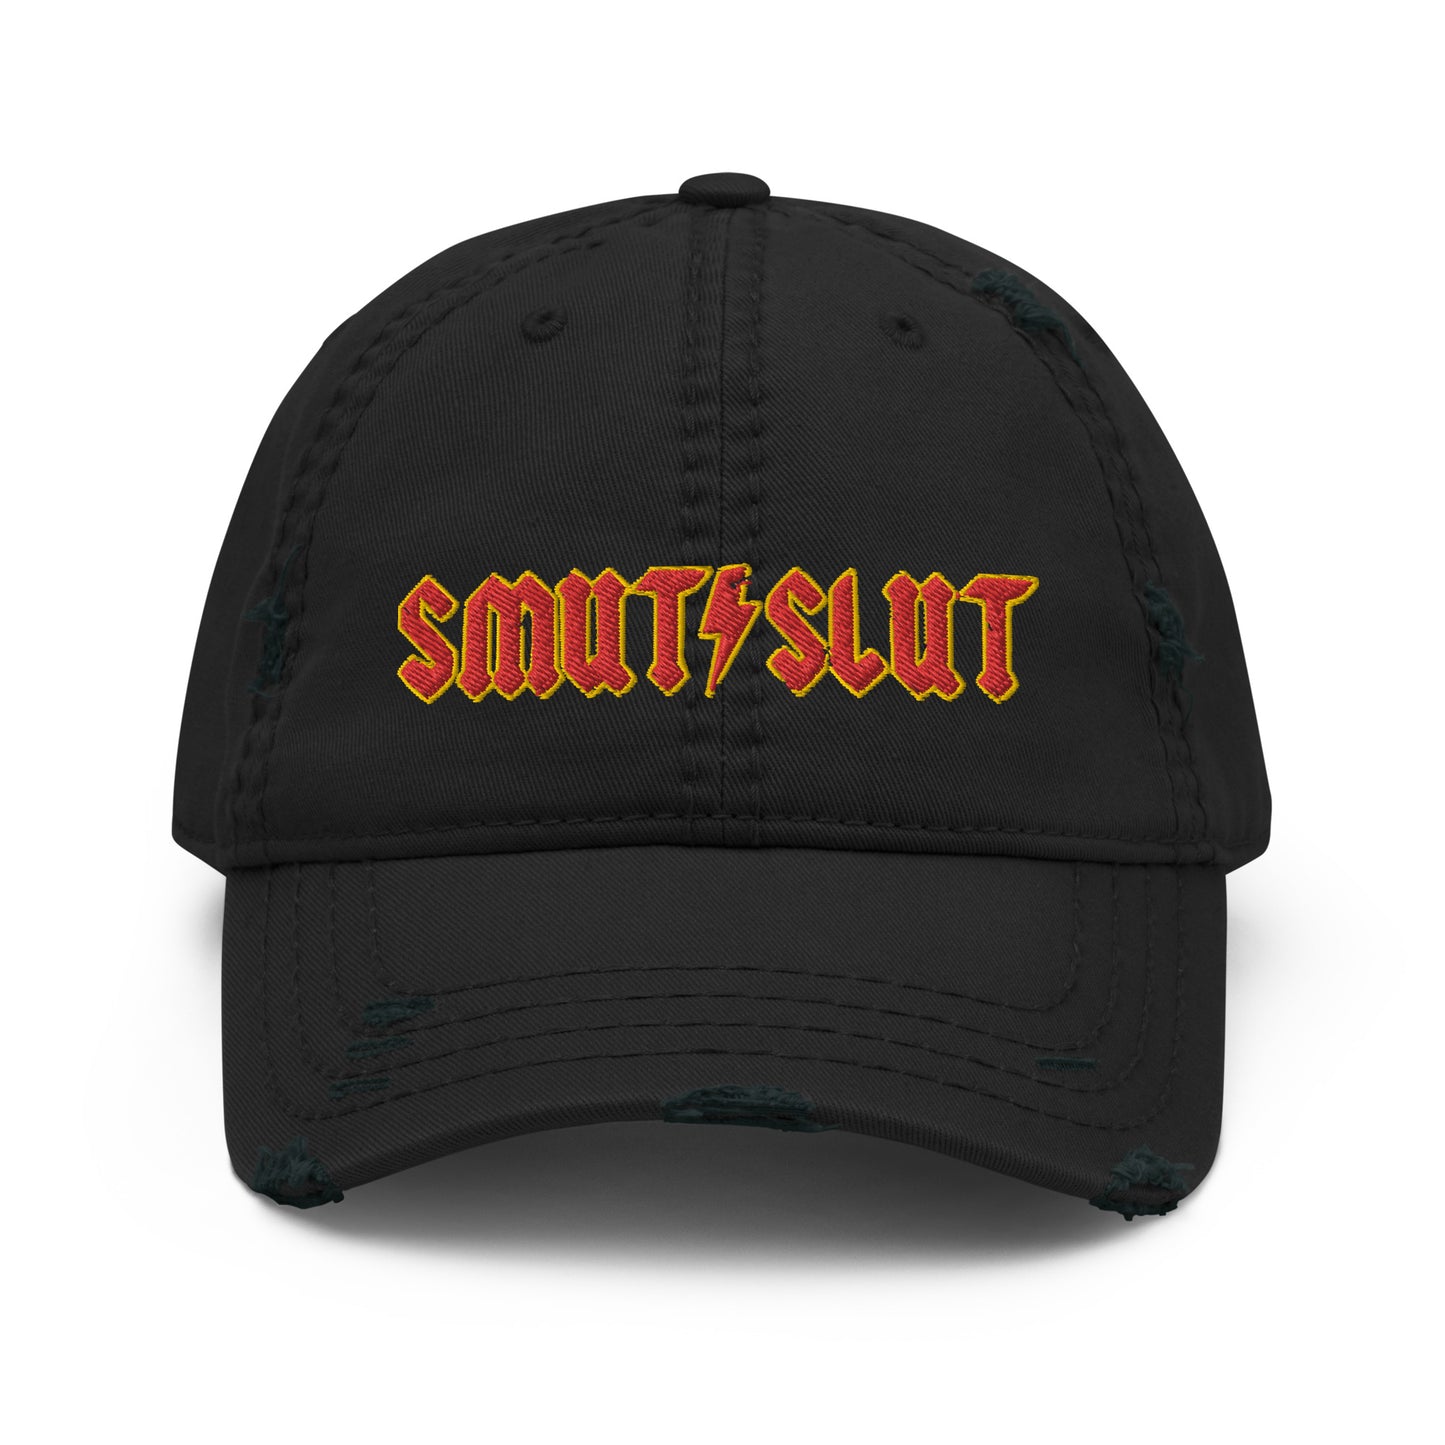 smut slut distressed dad hat